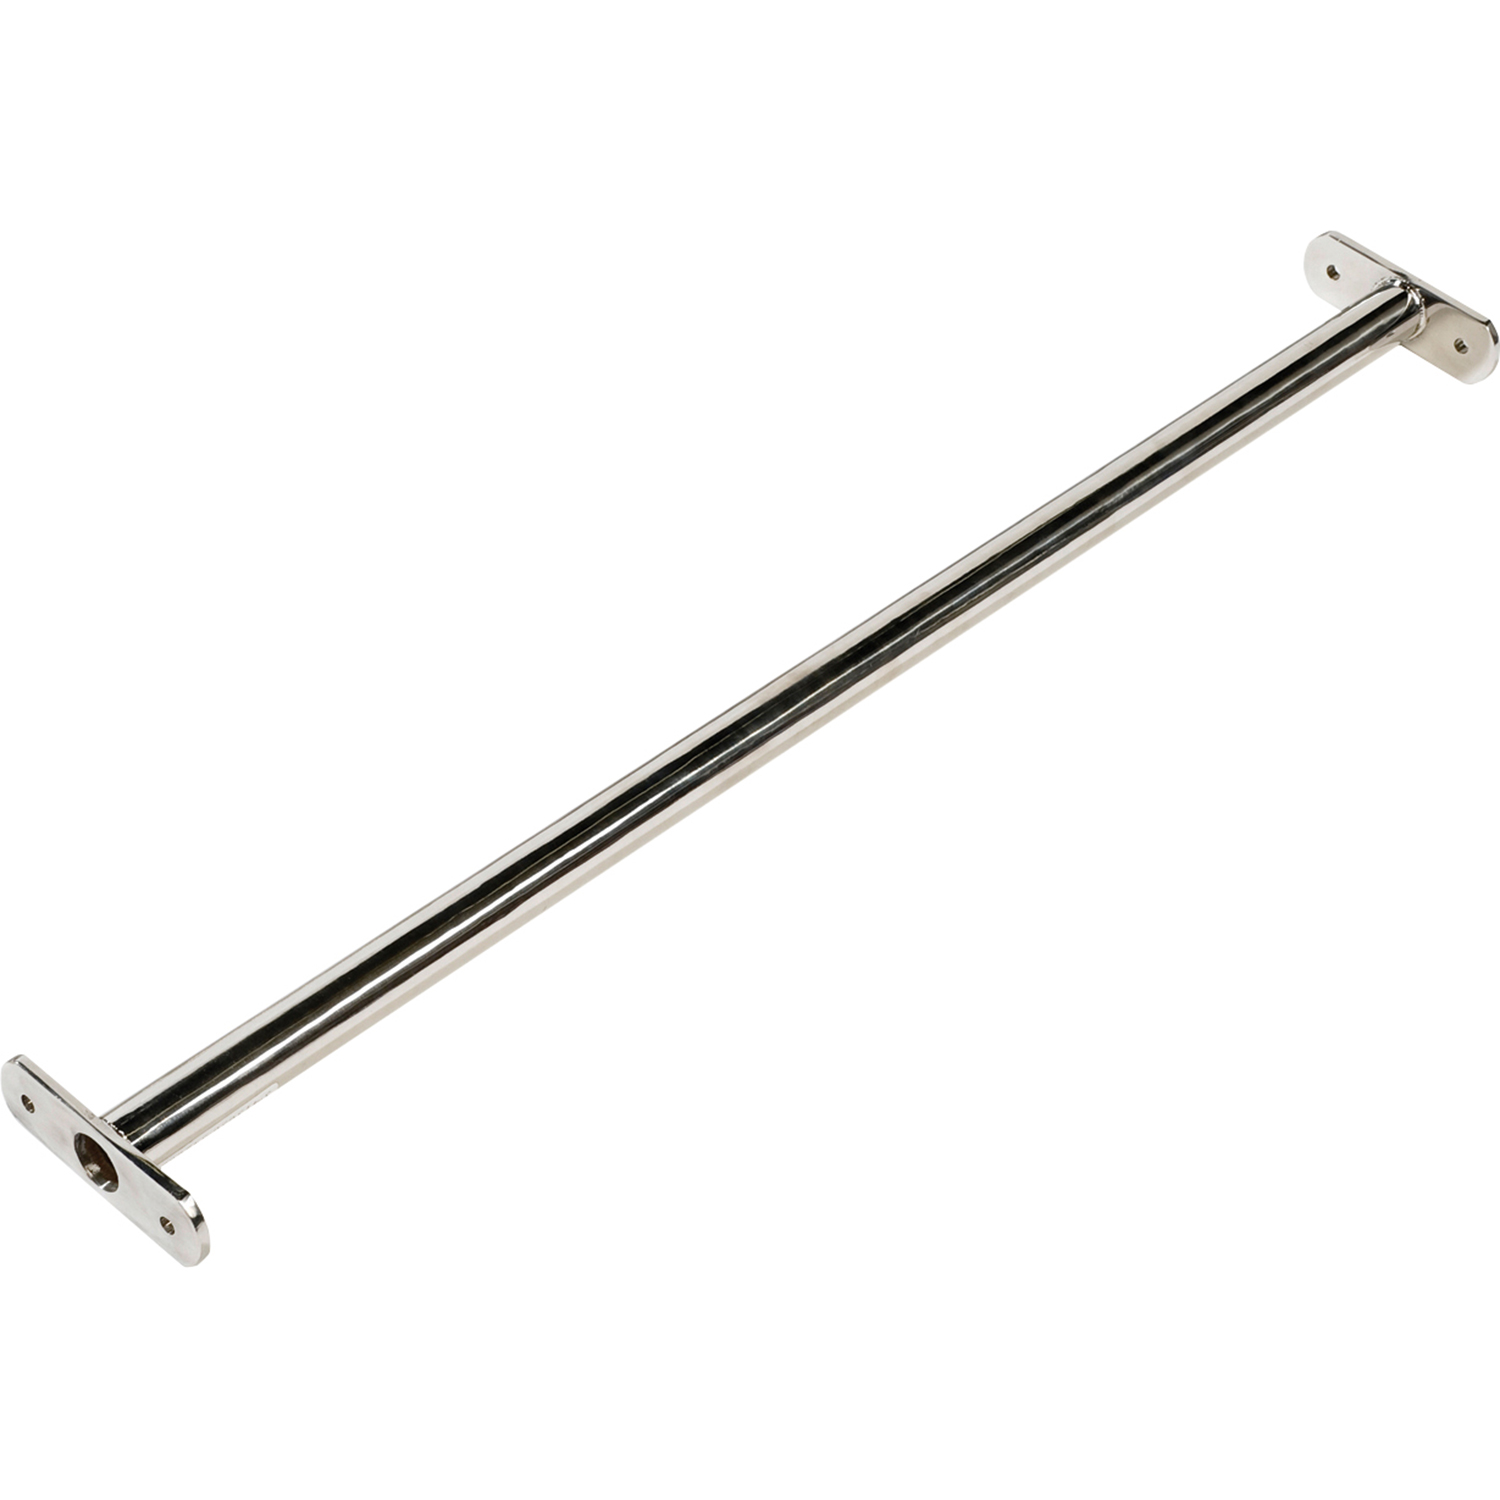 KBT metal tumble bar - 900mm - stainless steel